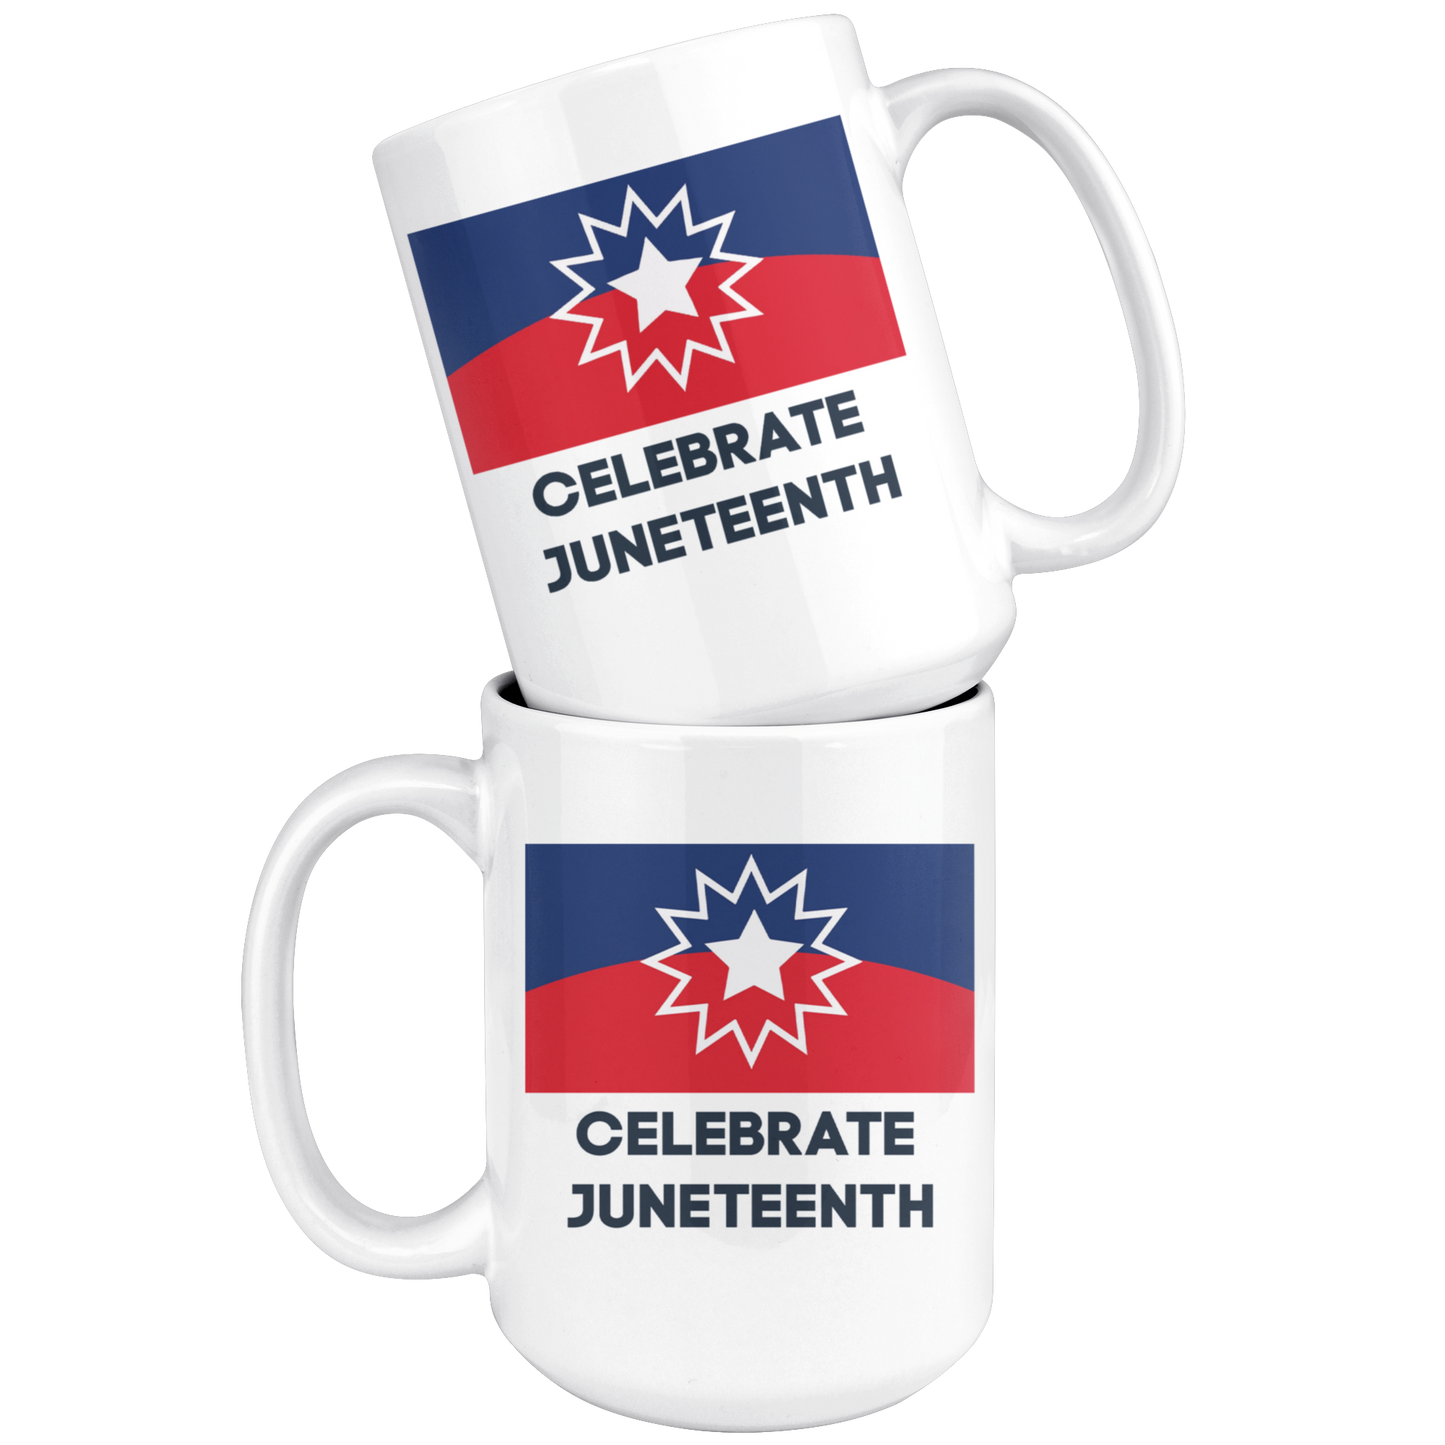 Celebrate Juneteenth Coffee Mug Black History Unique Coffee Cup Ceramic